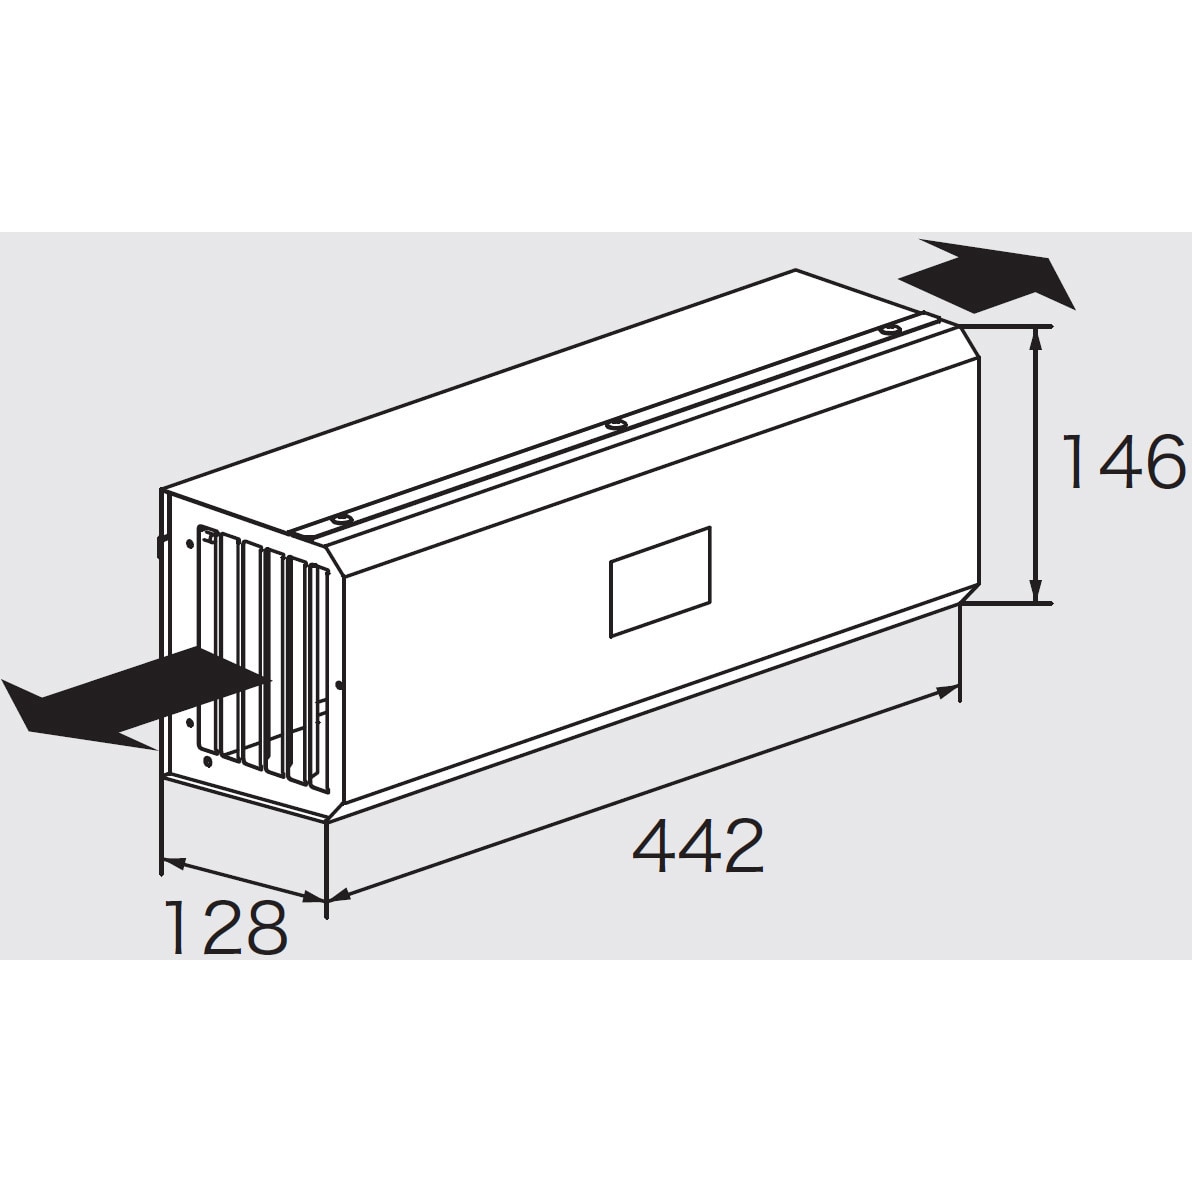 L40] ノーリツ 給湯器 アルコーブ排気カバー 関連部材 - 水回り、配管